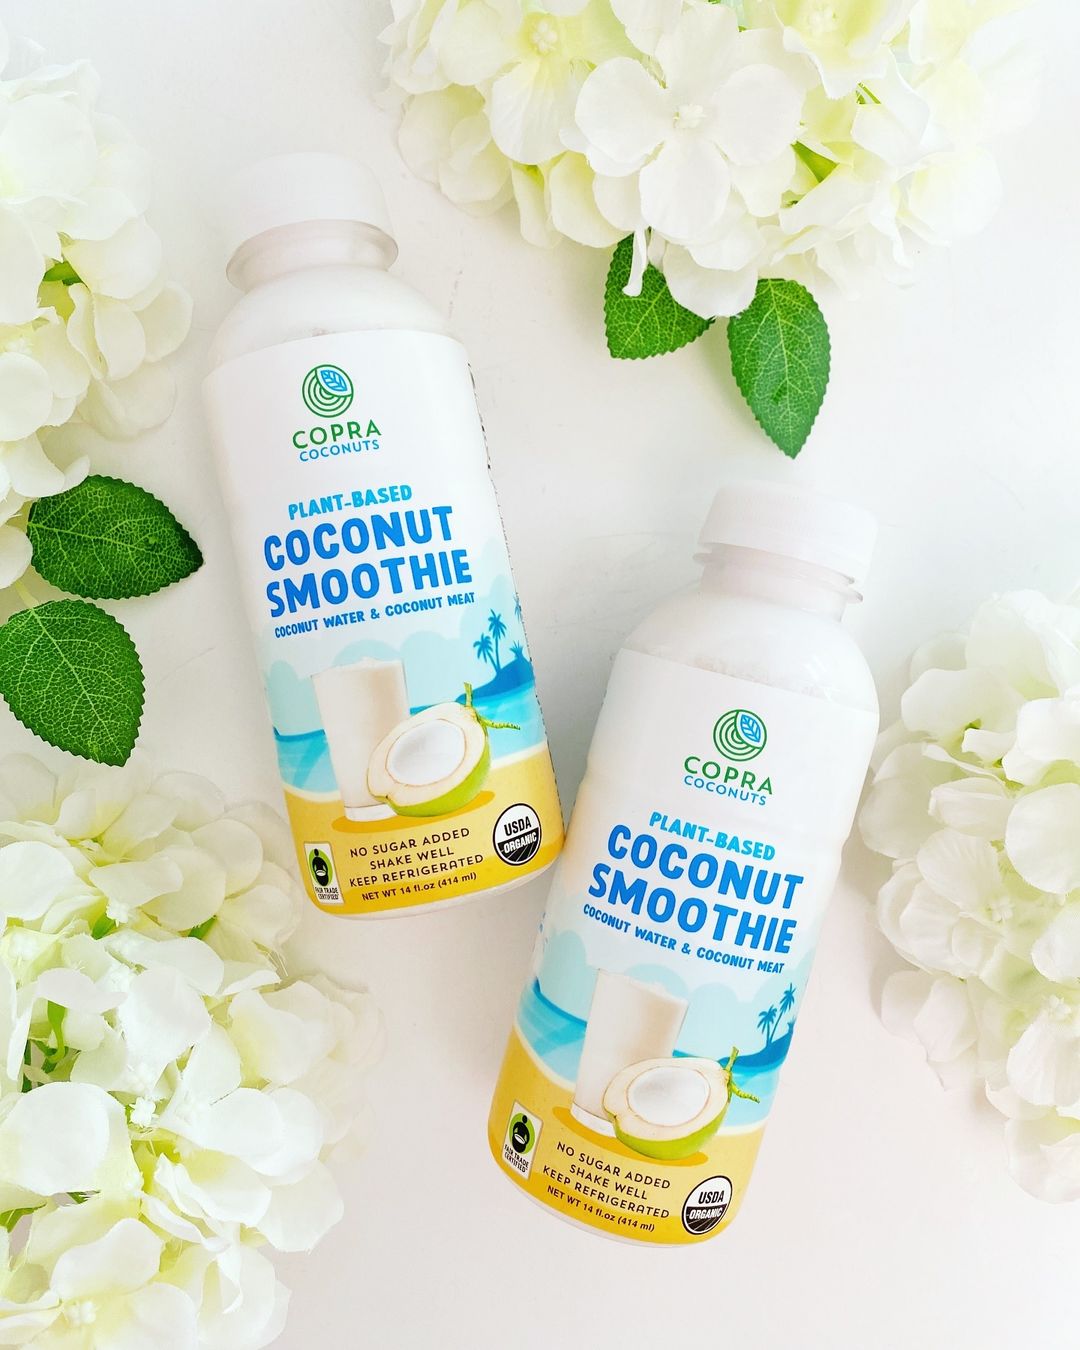 Copra Coconuts USDA Certified Organic Coconut water